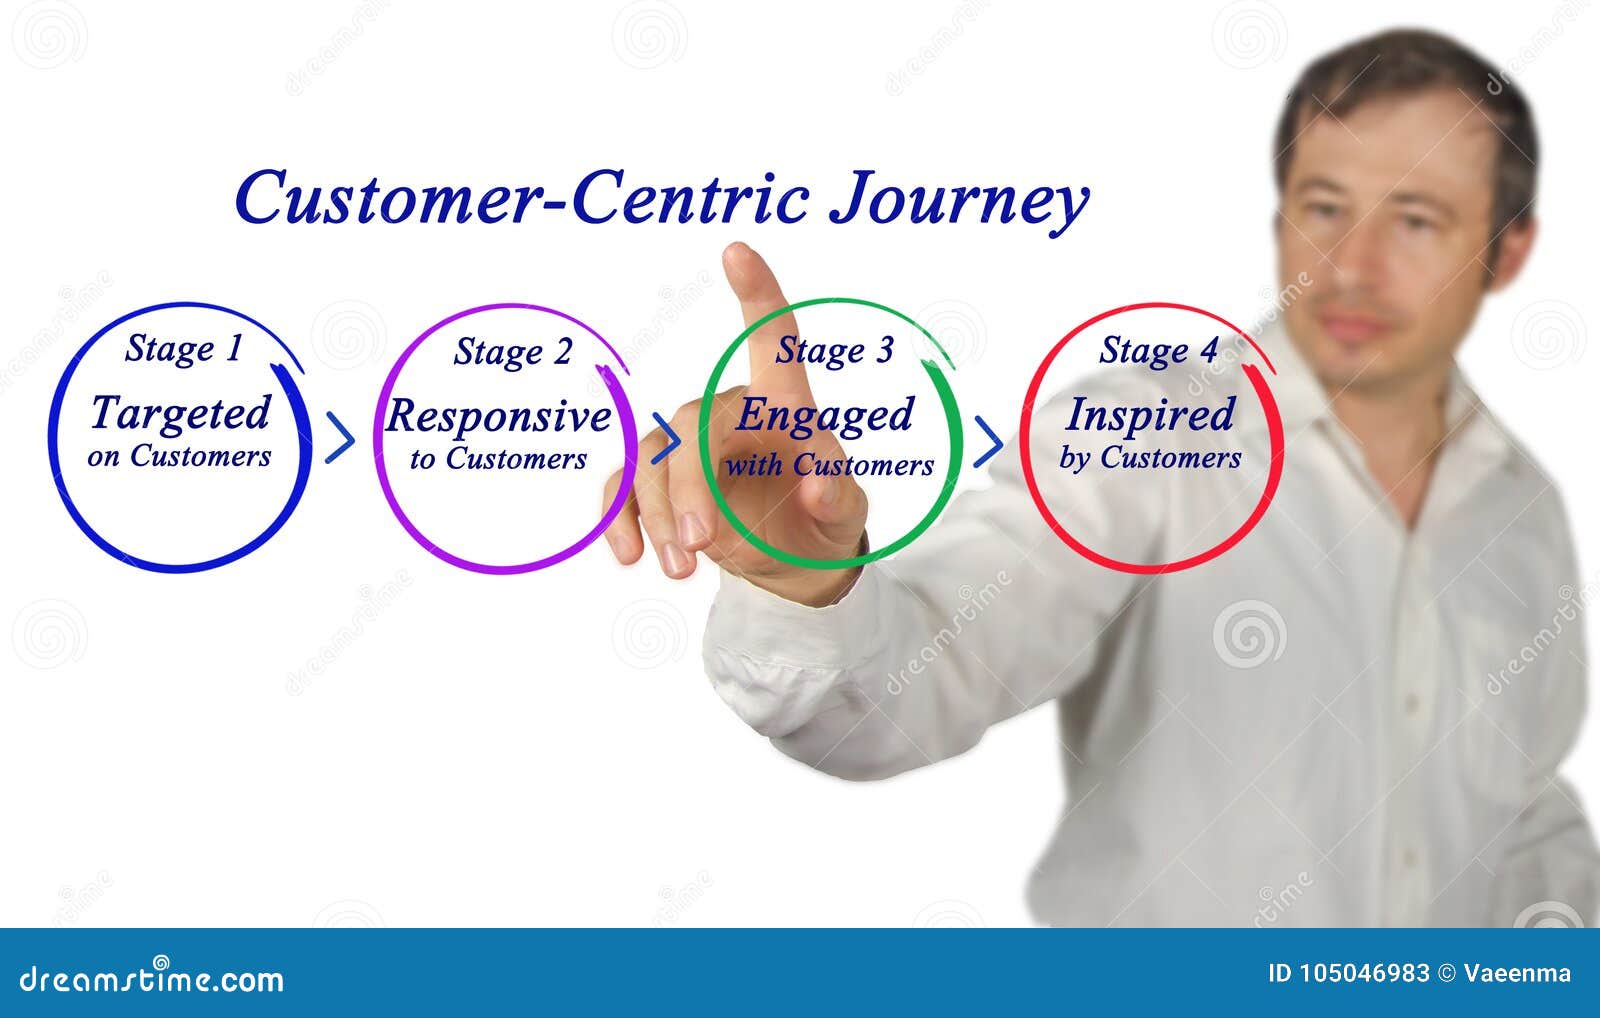 customer-centric journey